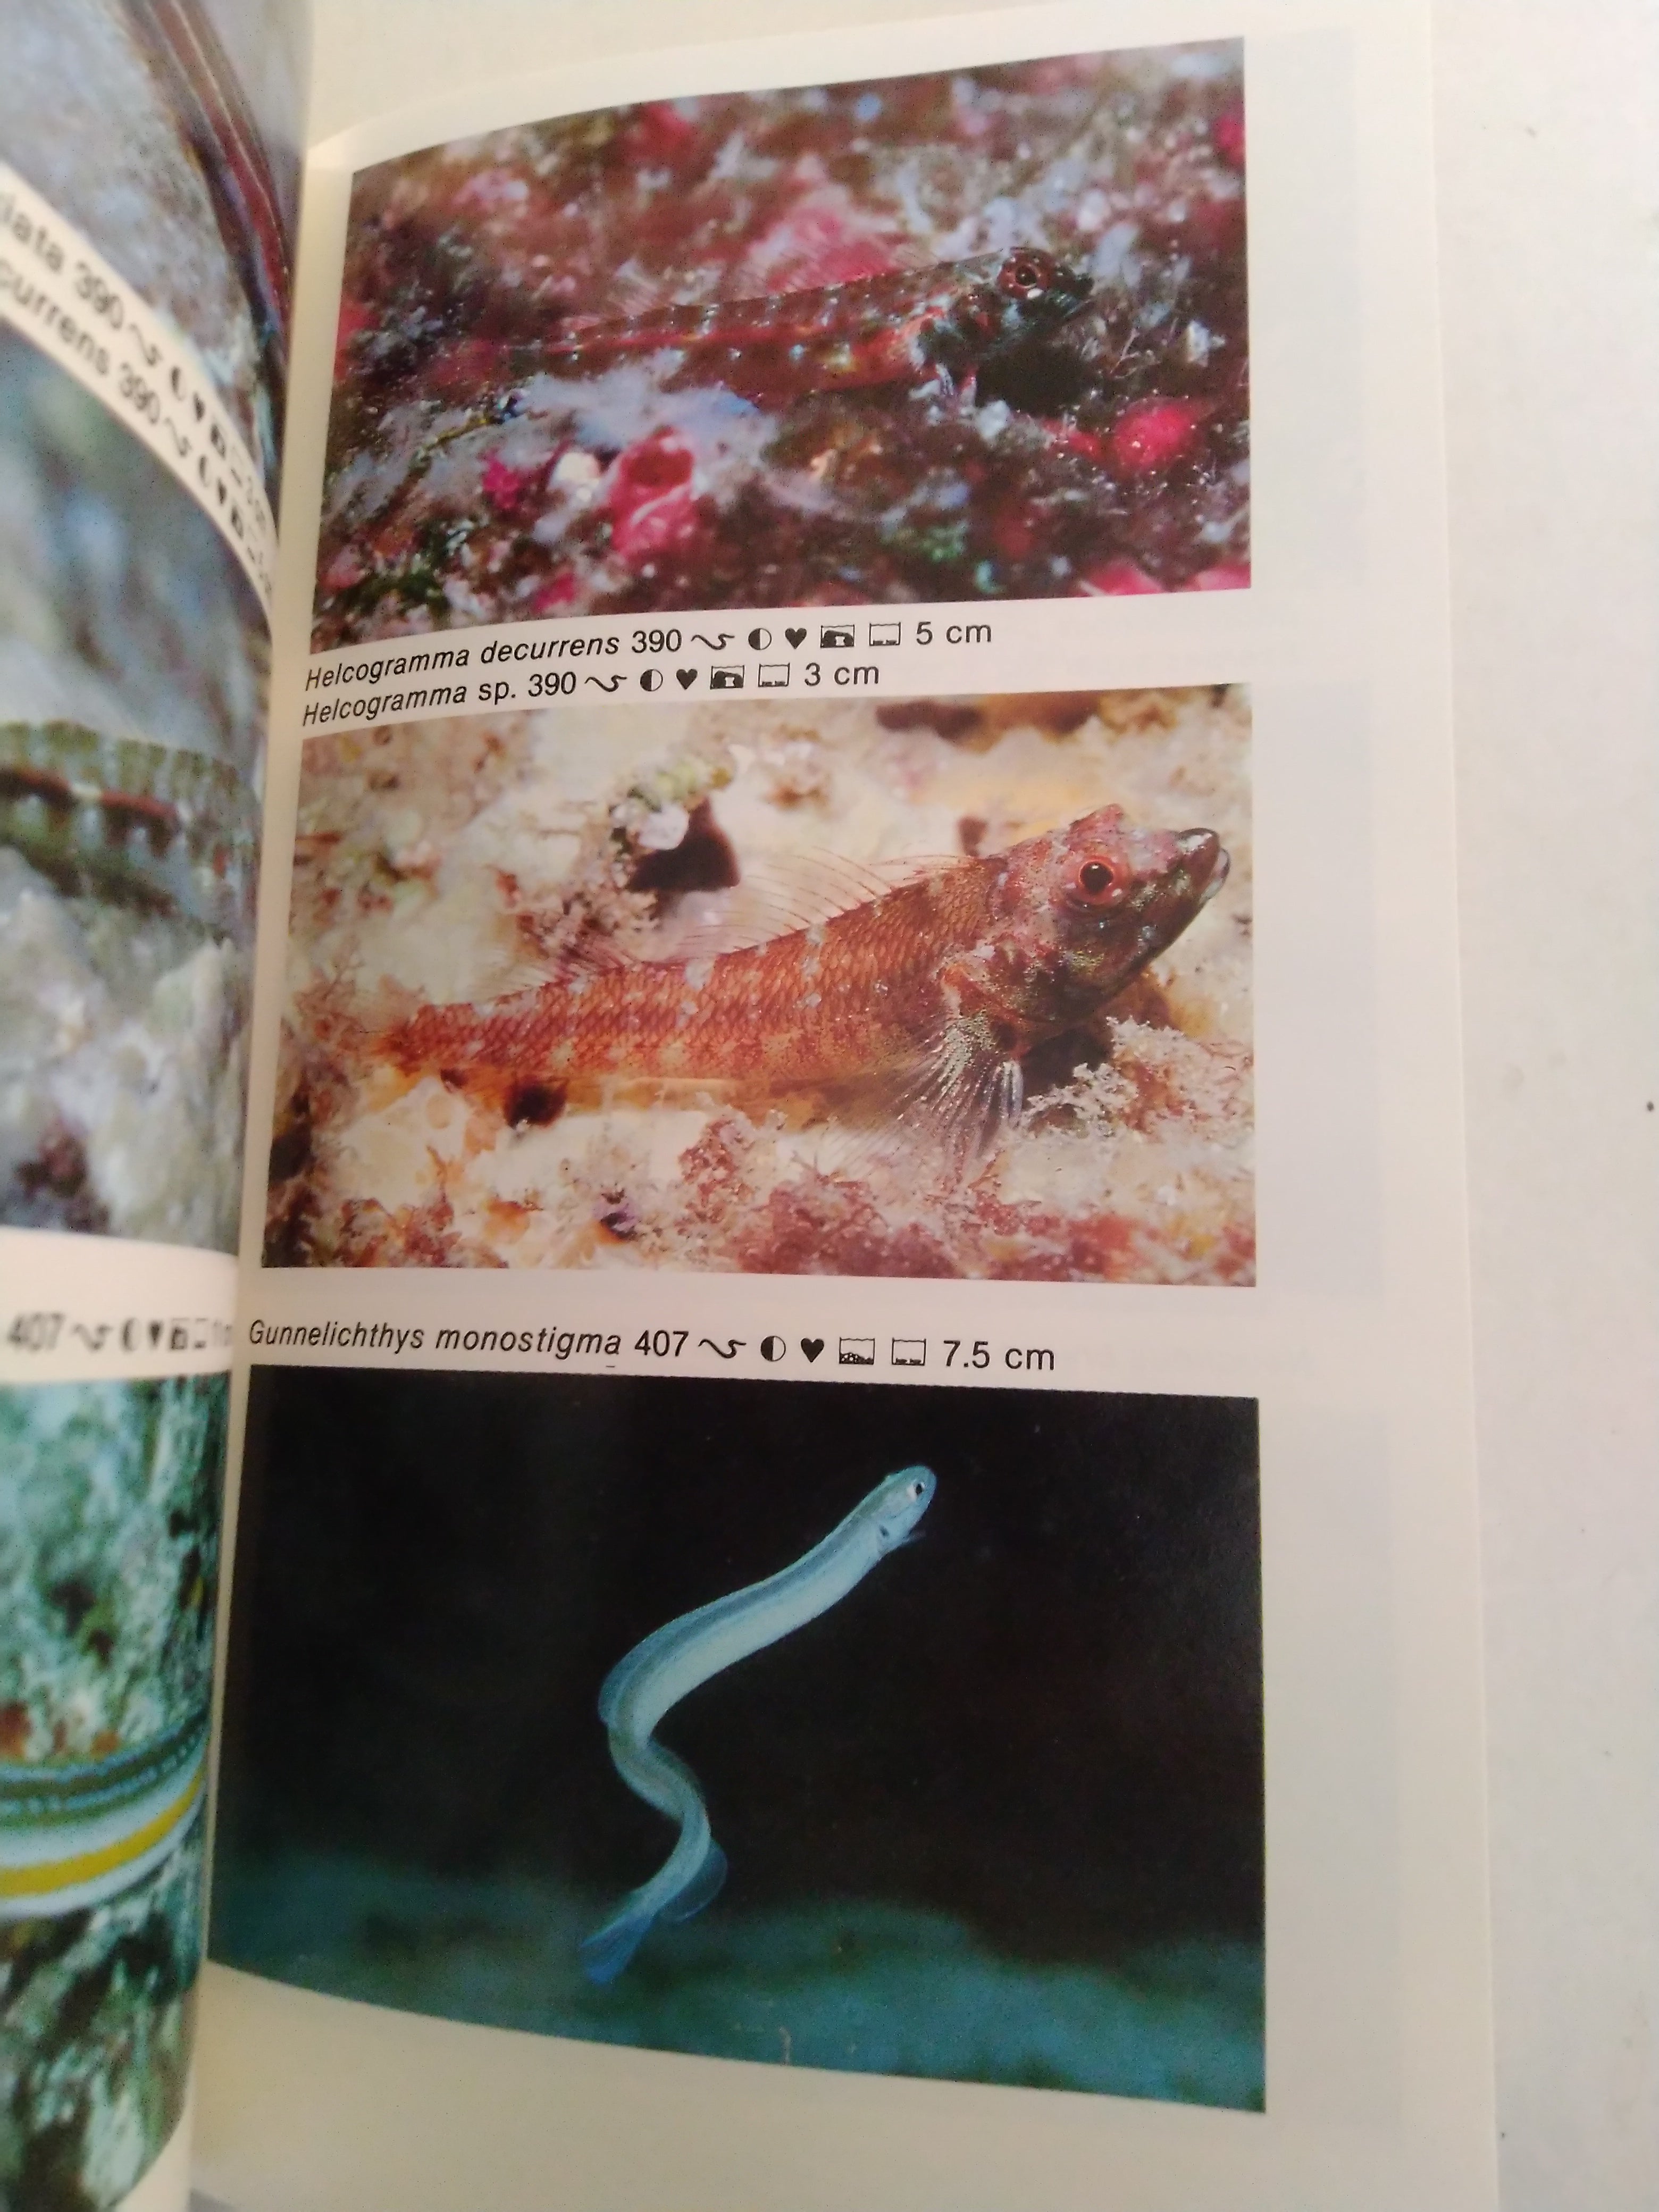 Dr. Burgess's Atlas of Marine Aquarium Fishes Second Edition by Dr. Warren E. Burgess